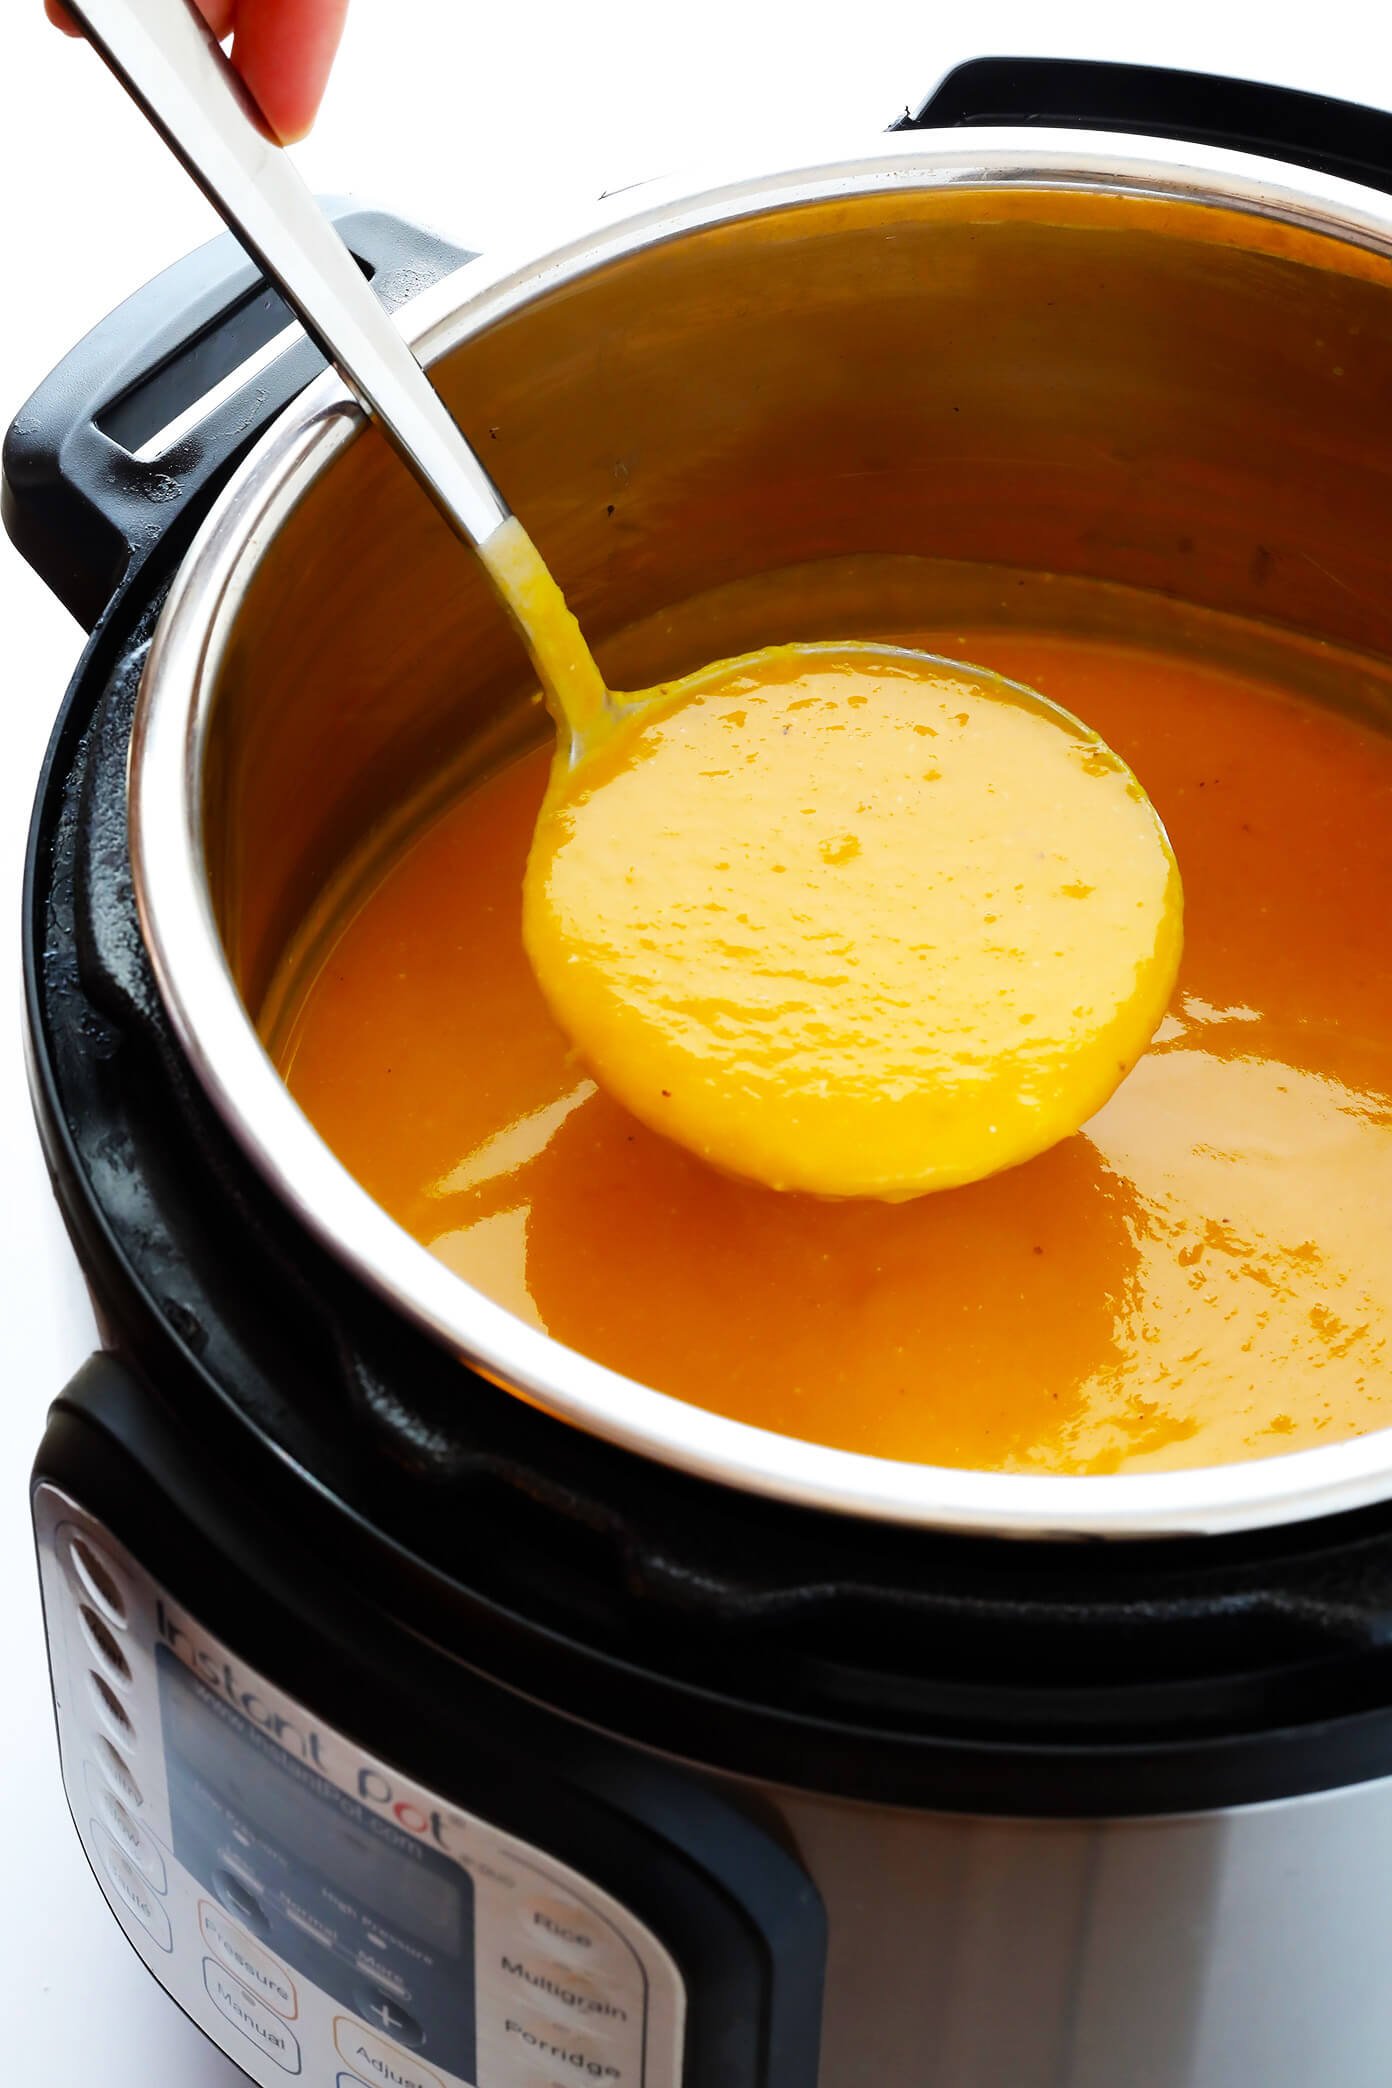 https://www.gimmesomeoven.com/wp-content/uploads/2017/10/Pressure-Cooker-Instant-Pot-Butternut-Squash-Soup-Recipe-2.jpg